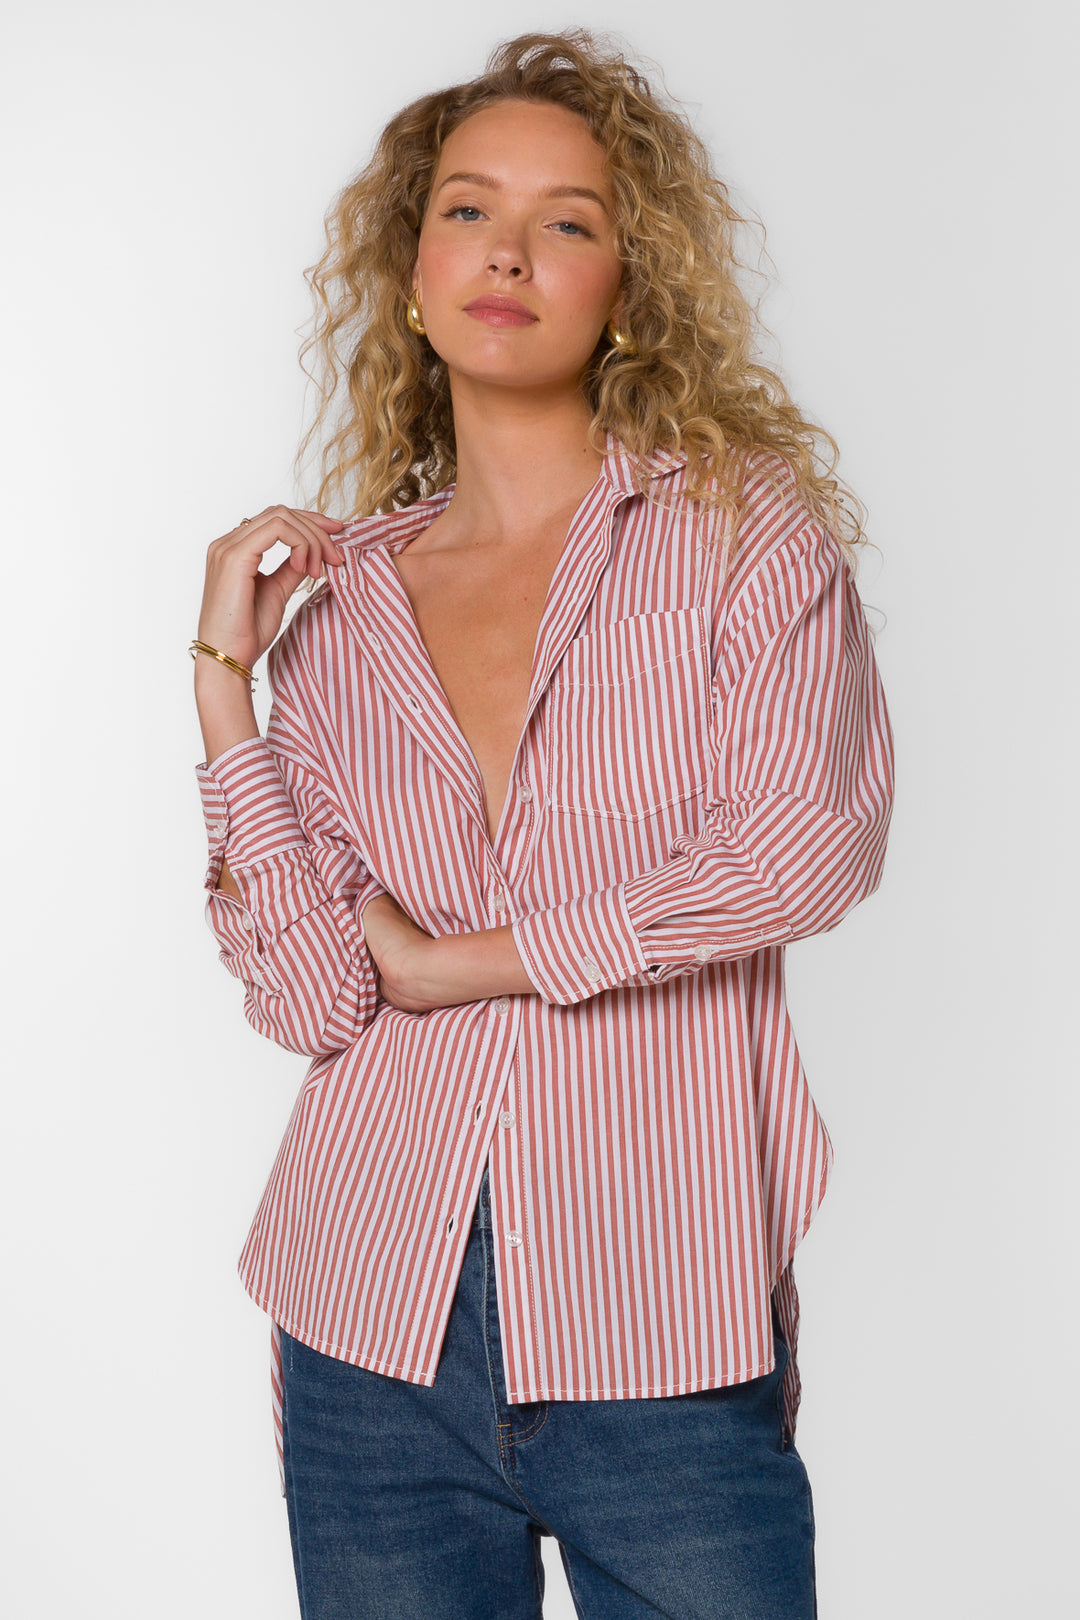 Waylor Pinecone Stripe Shirt - Tops - Velvet Heart Clothing